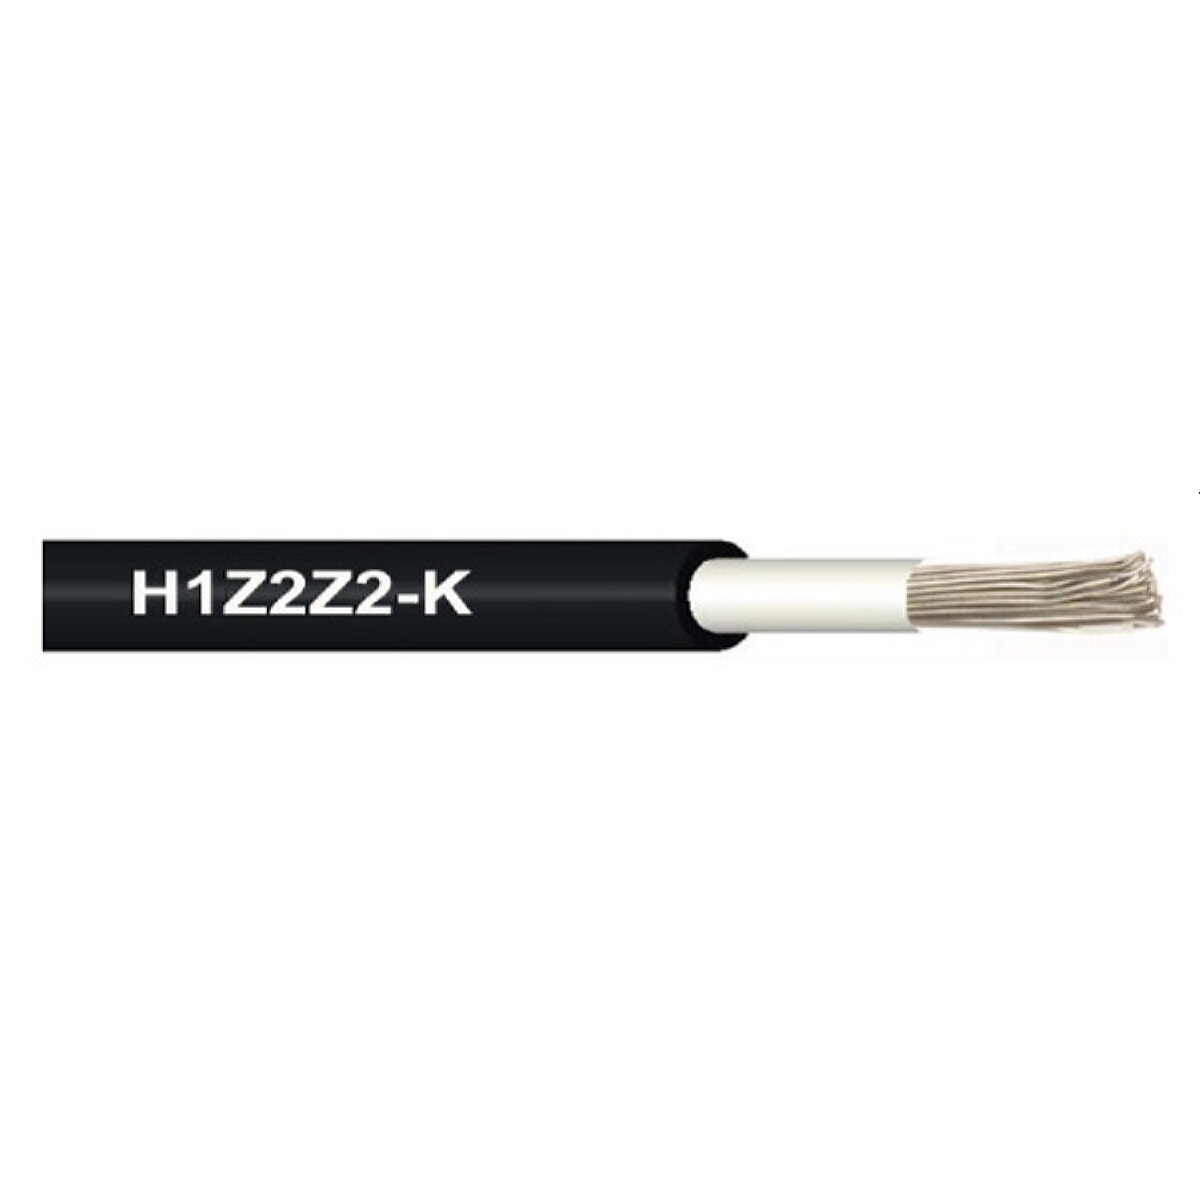 NEUT solar cable H1Z2Z2-K 1x6 black can be buried EN50618